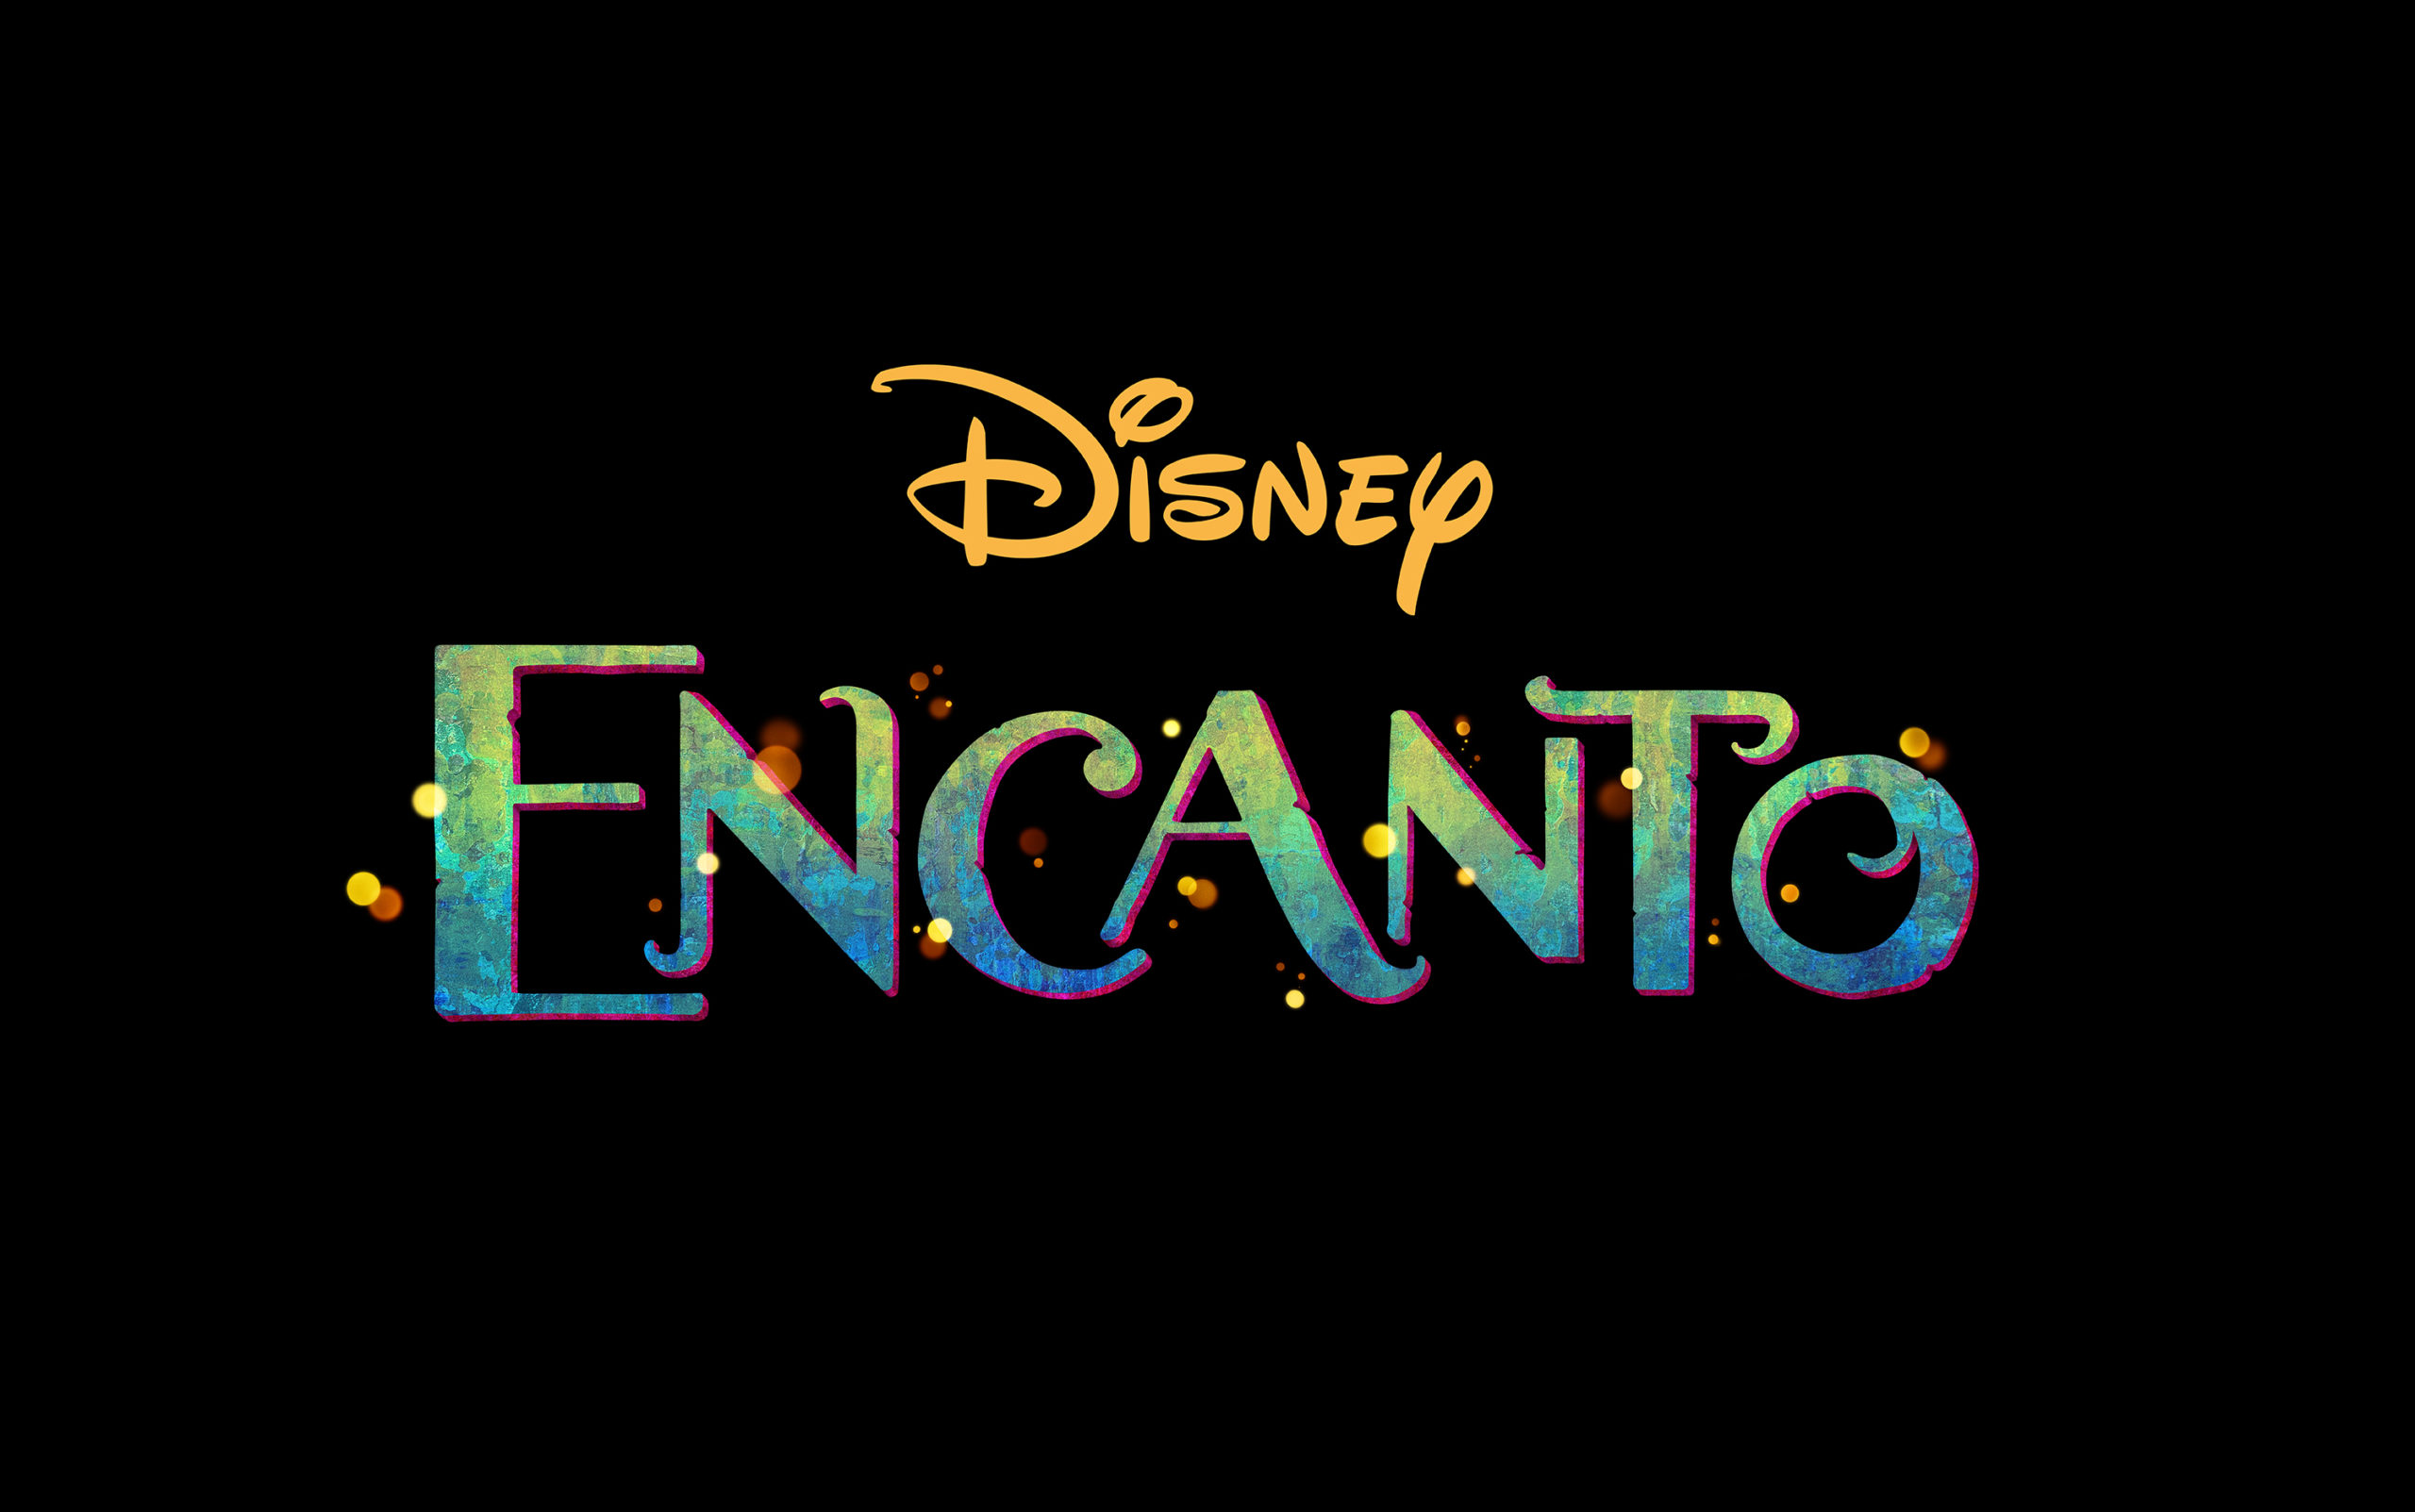 Encanto's logo. (Image: Disney)